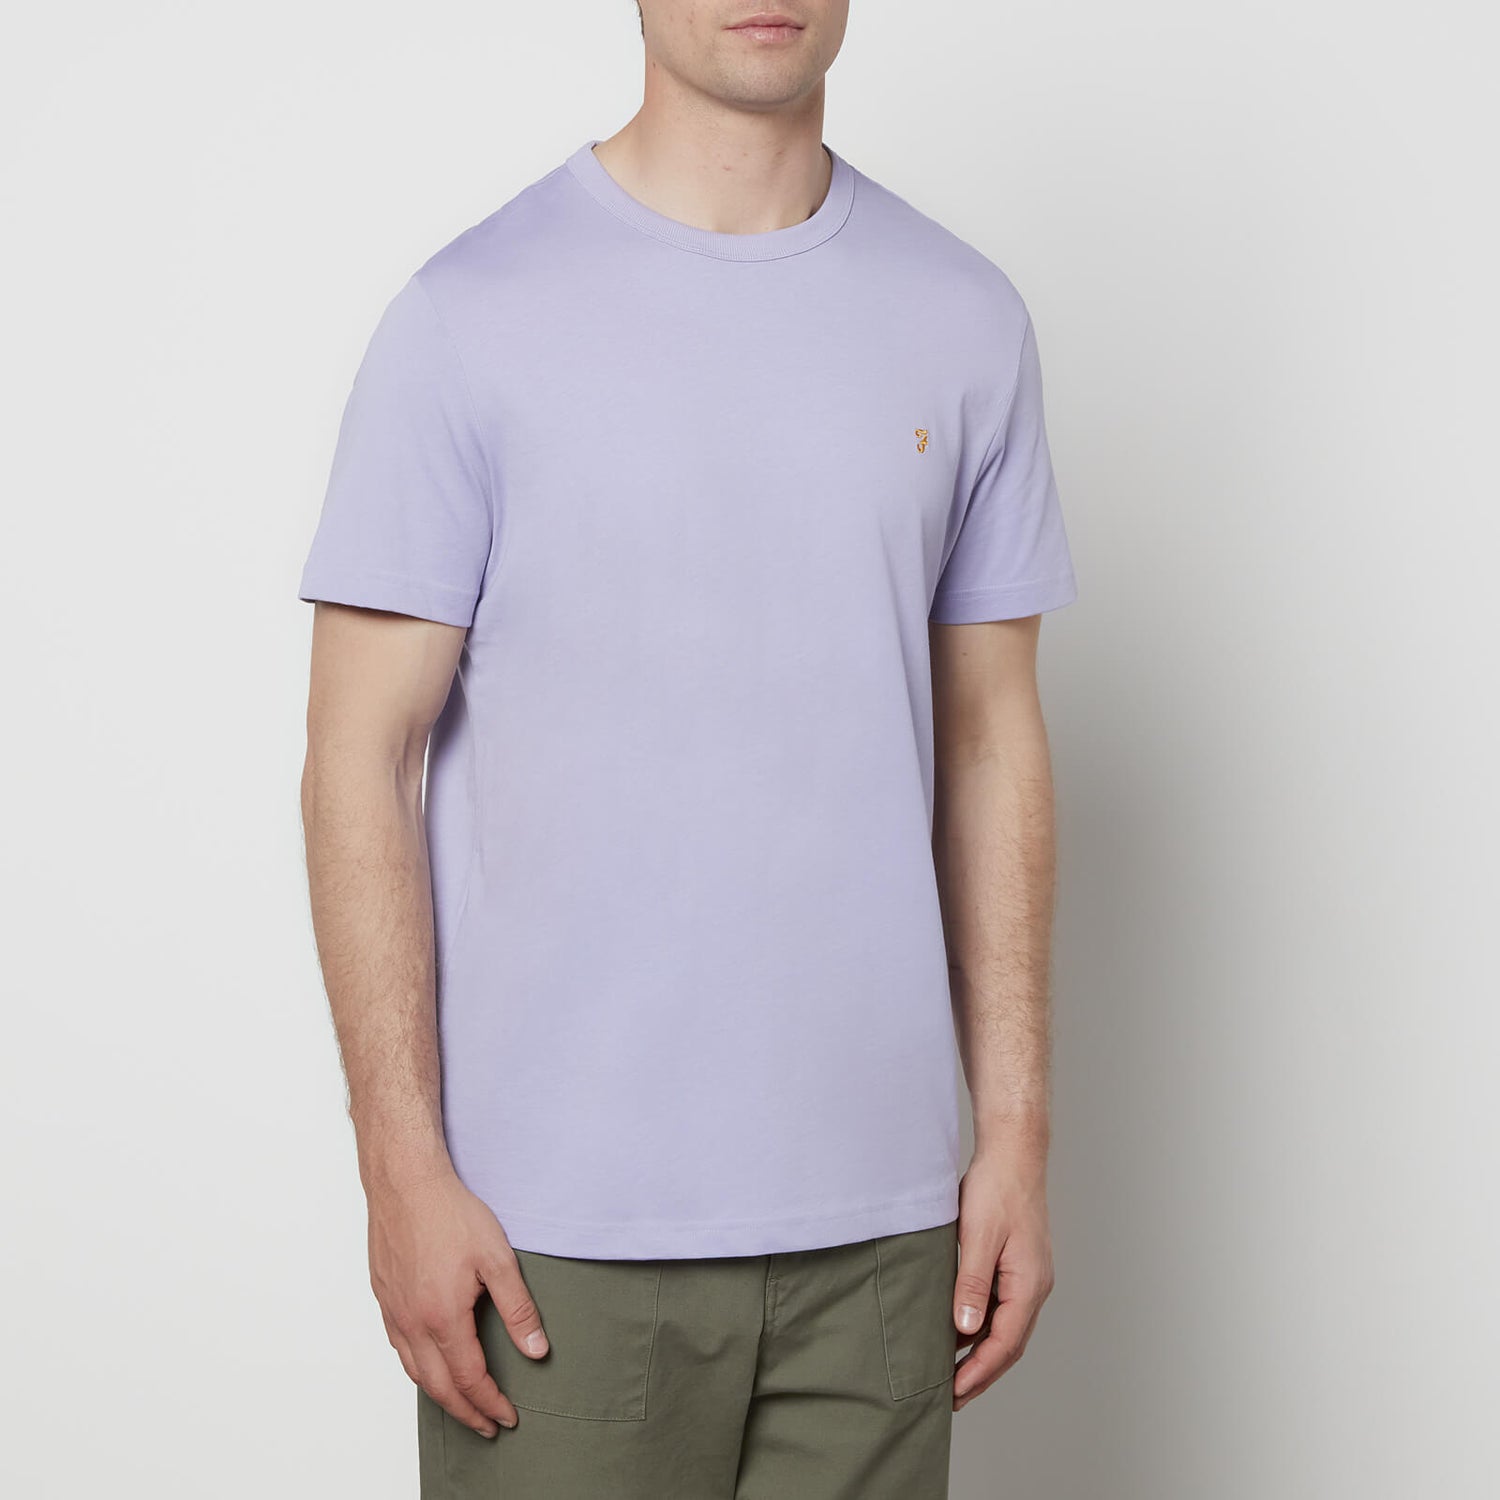 Farah Men's Danny T-Shirt - Dusty Lilac - S